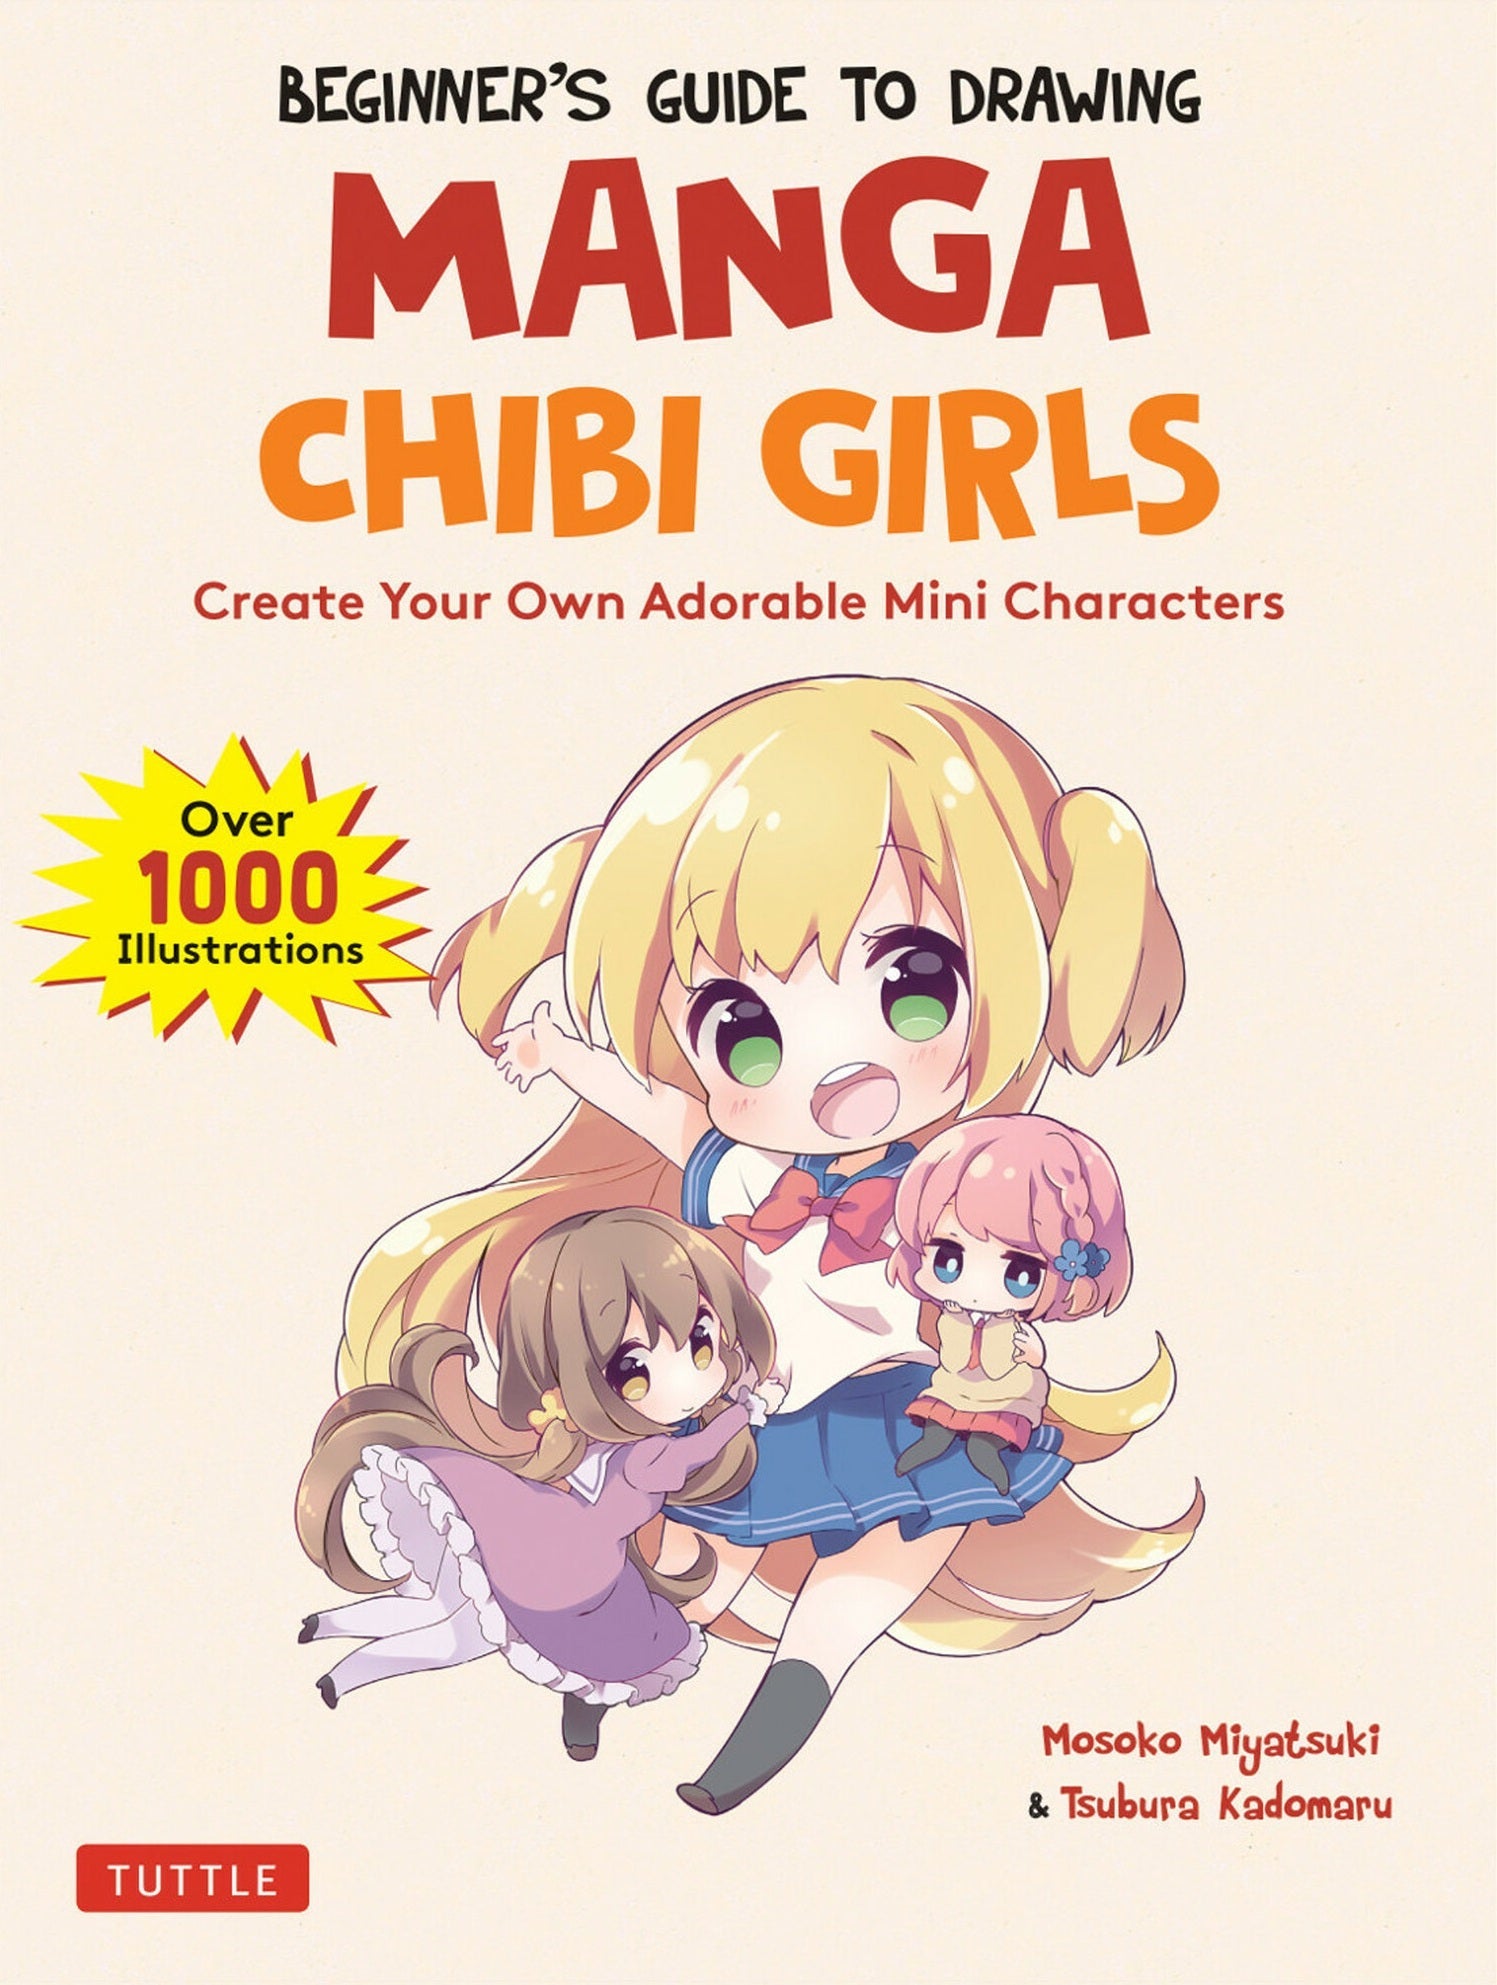 Beginners Guide to Drawing Manga Chibi Girls - Mosoko Miyatsuki - 9784805316139 - Tuttle Publishing